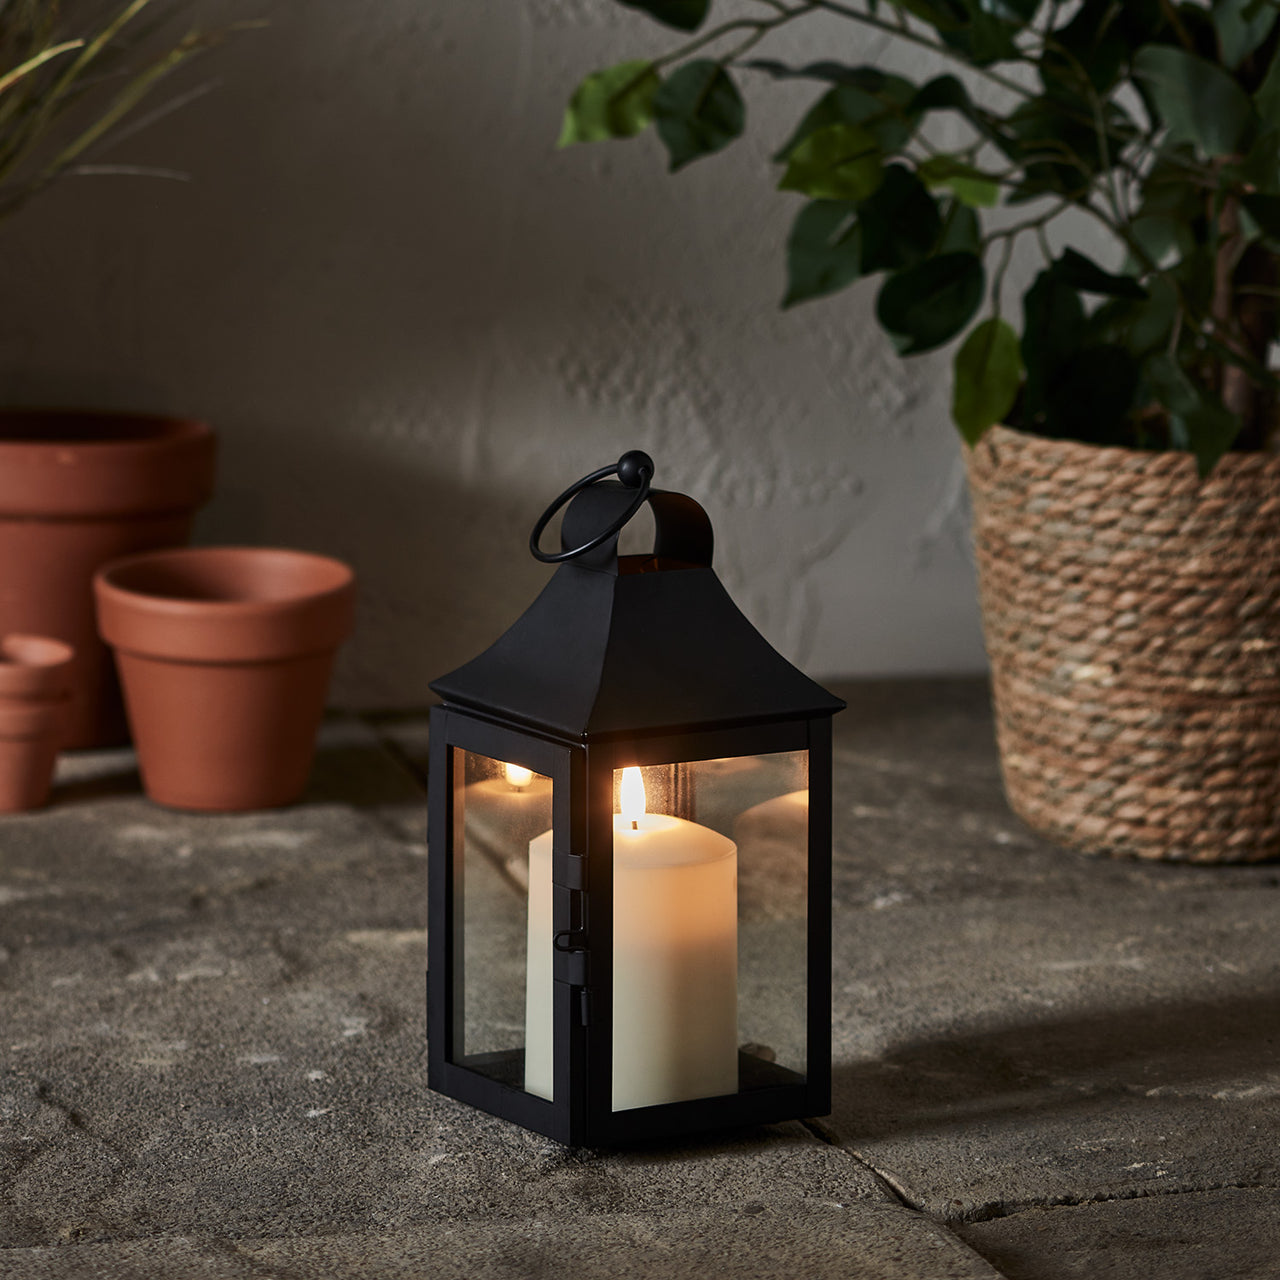 25cm Albury Black Garden Lantern with TruGlow® Candle